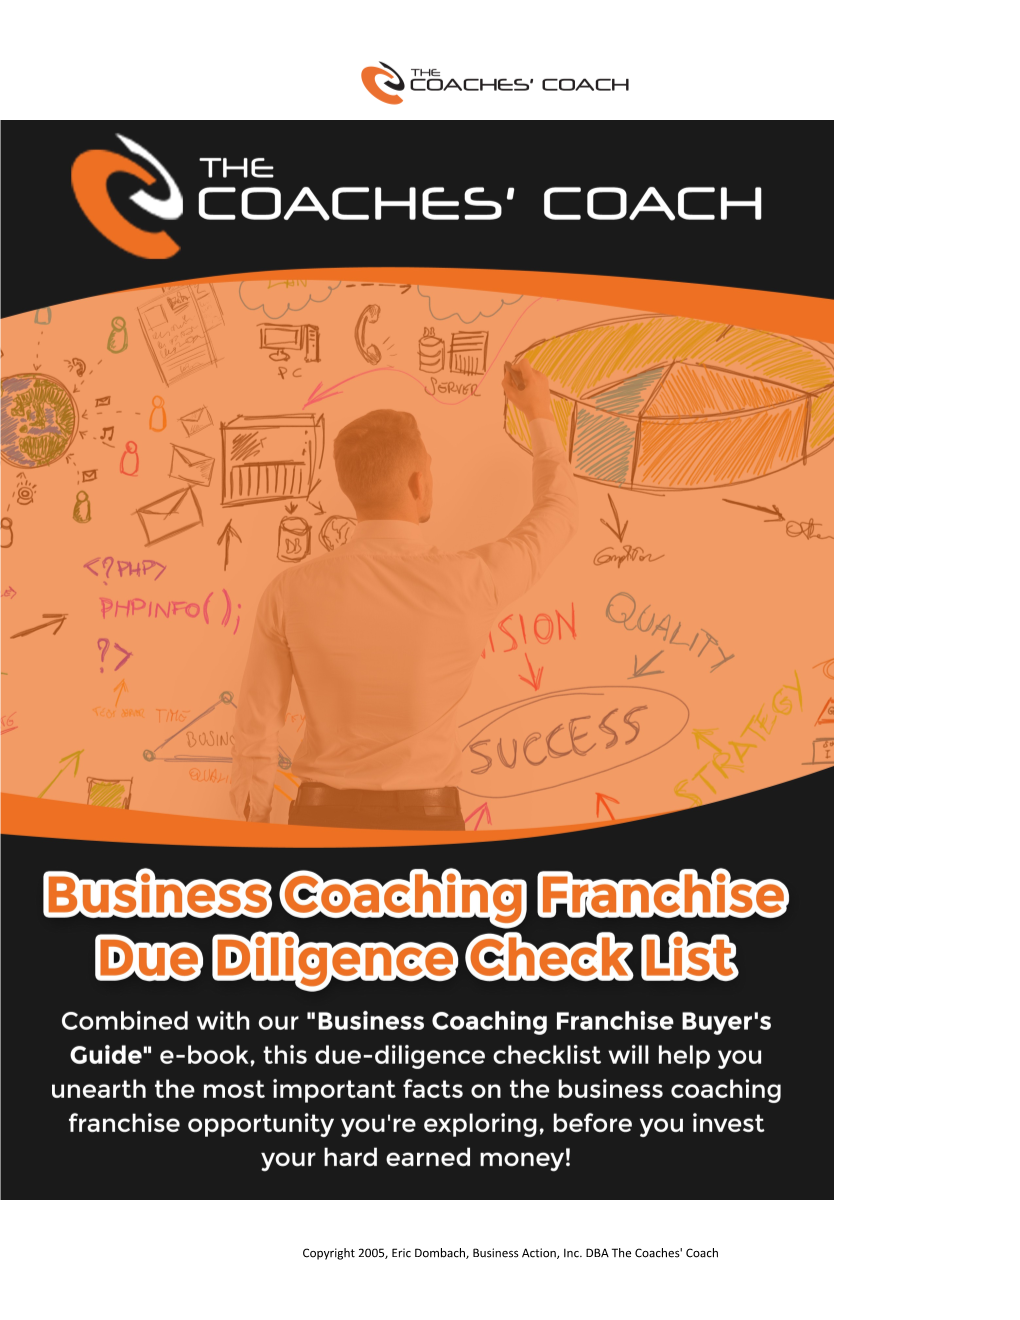 The Business Coaching Franchise Manual